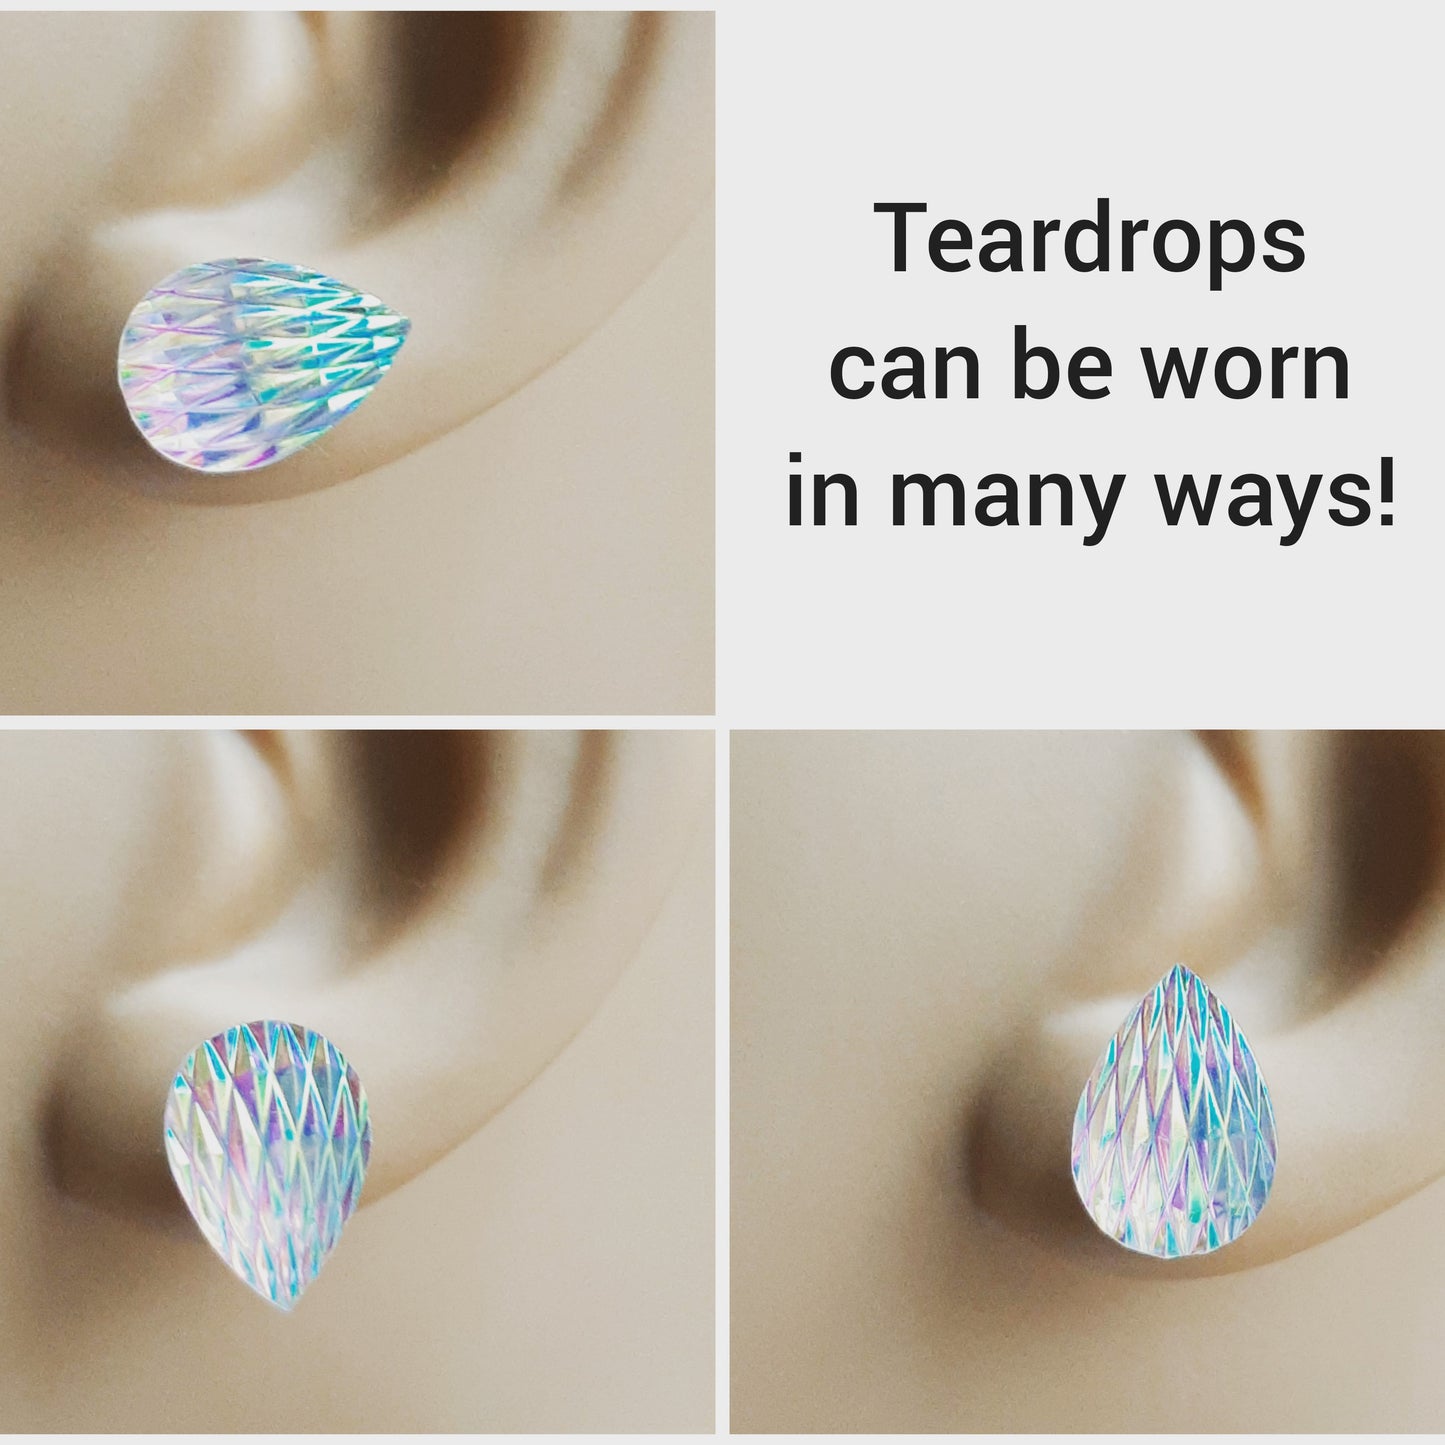 Ultra Violet Druzy Teardrop Stud Earrings - Hypoallergenic Titanium Posts